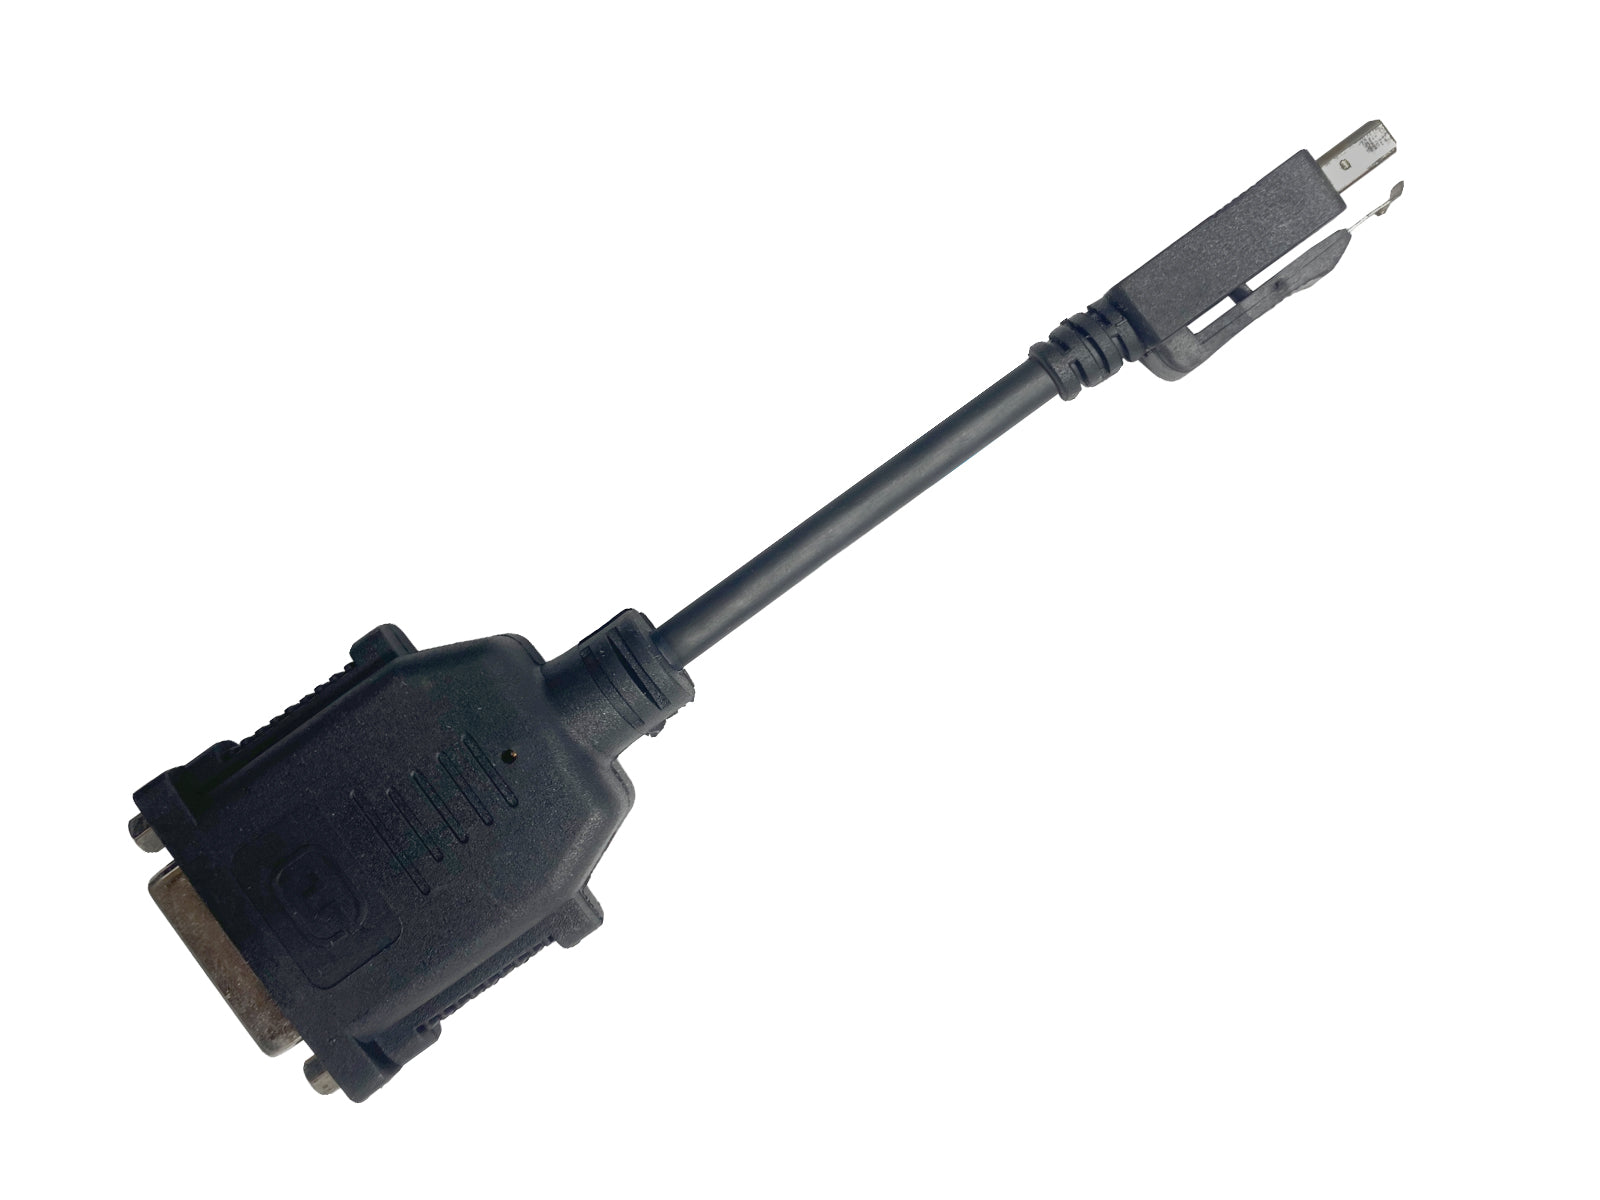 PNY Mini DisplayPort zu DVI Videosignal-Adapter-Konverter (91008580) Monitors.com